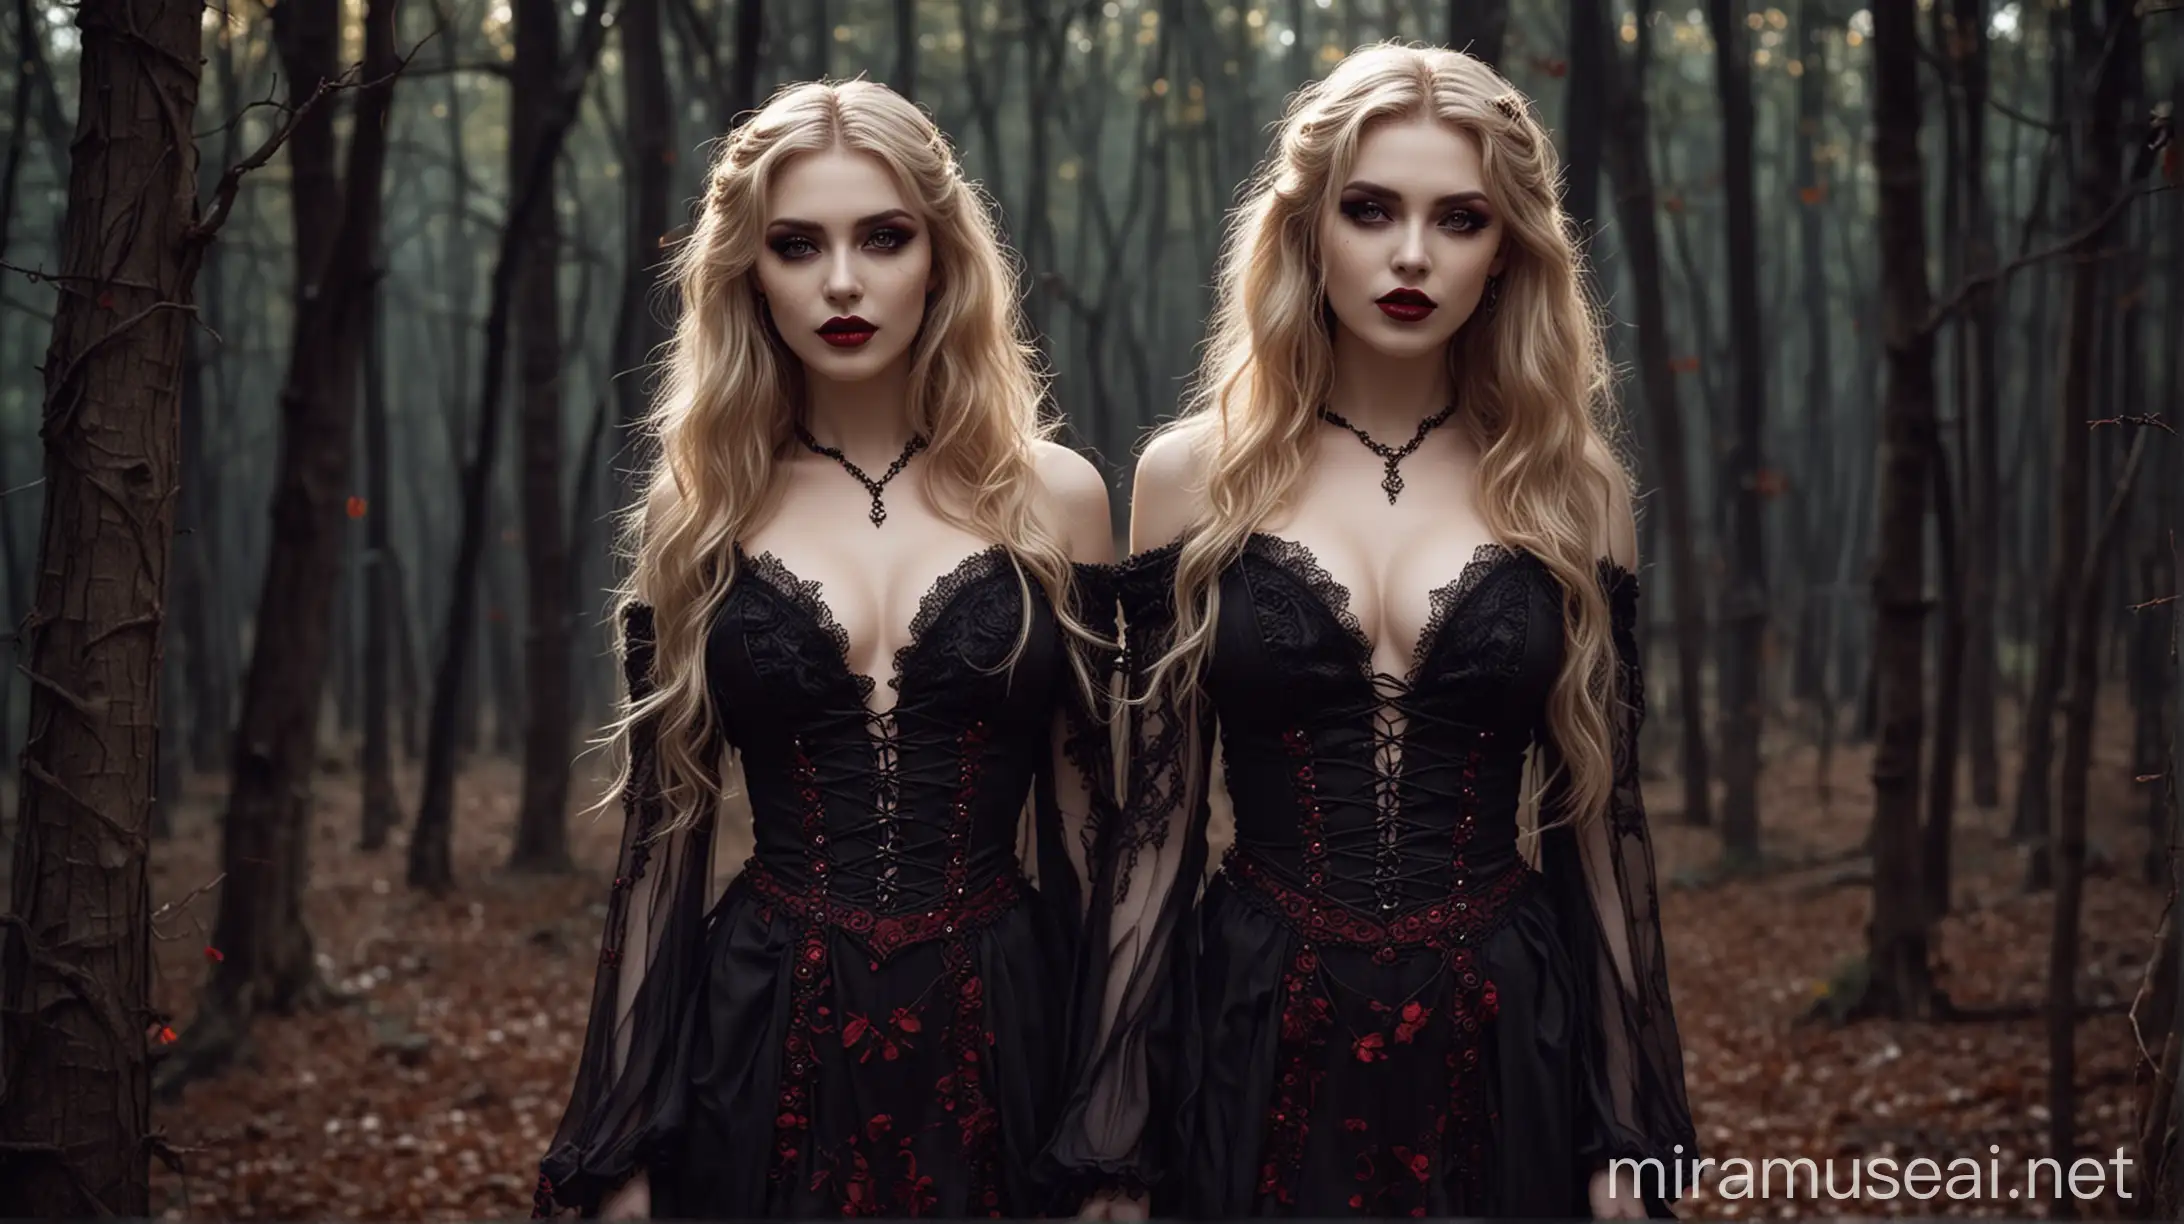 Elegant Gothic Vampire Woman in Moonlit Forest